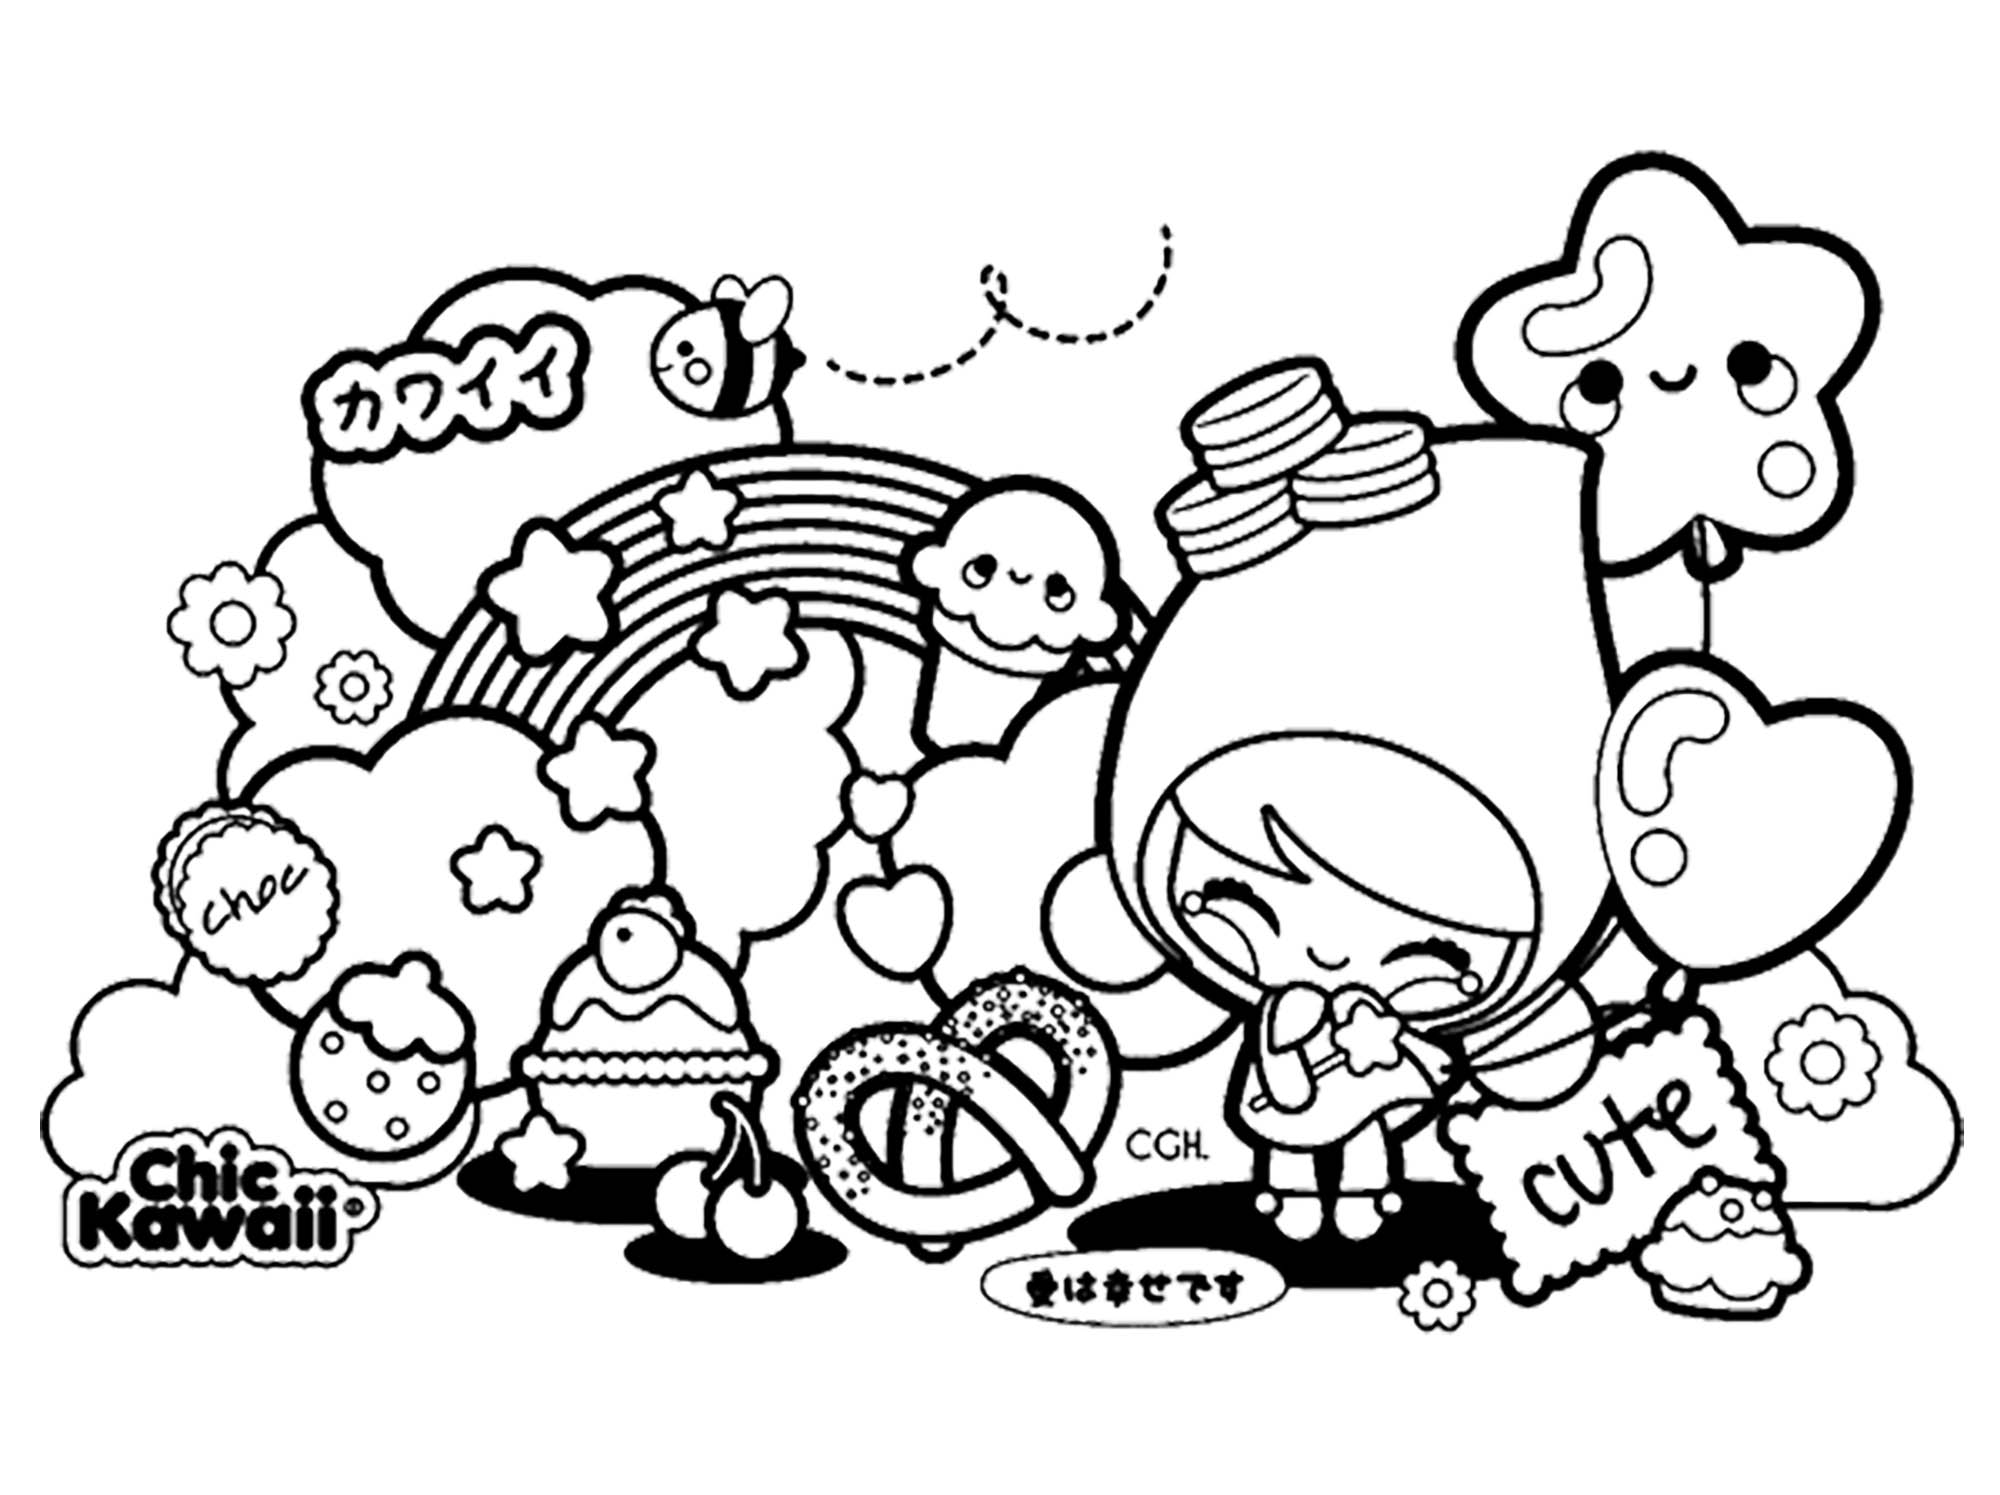 Kawaii drawing, with cute characters